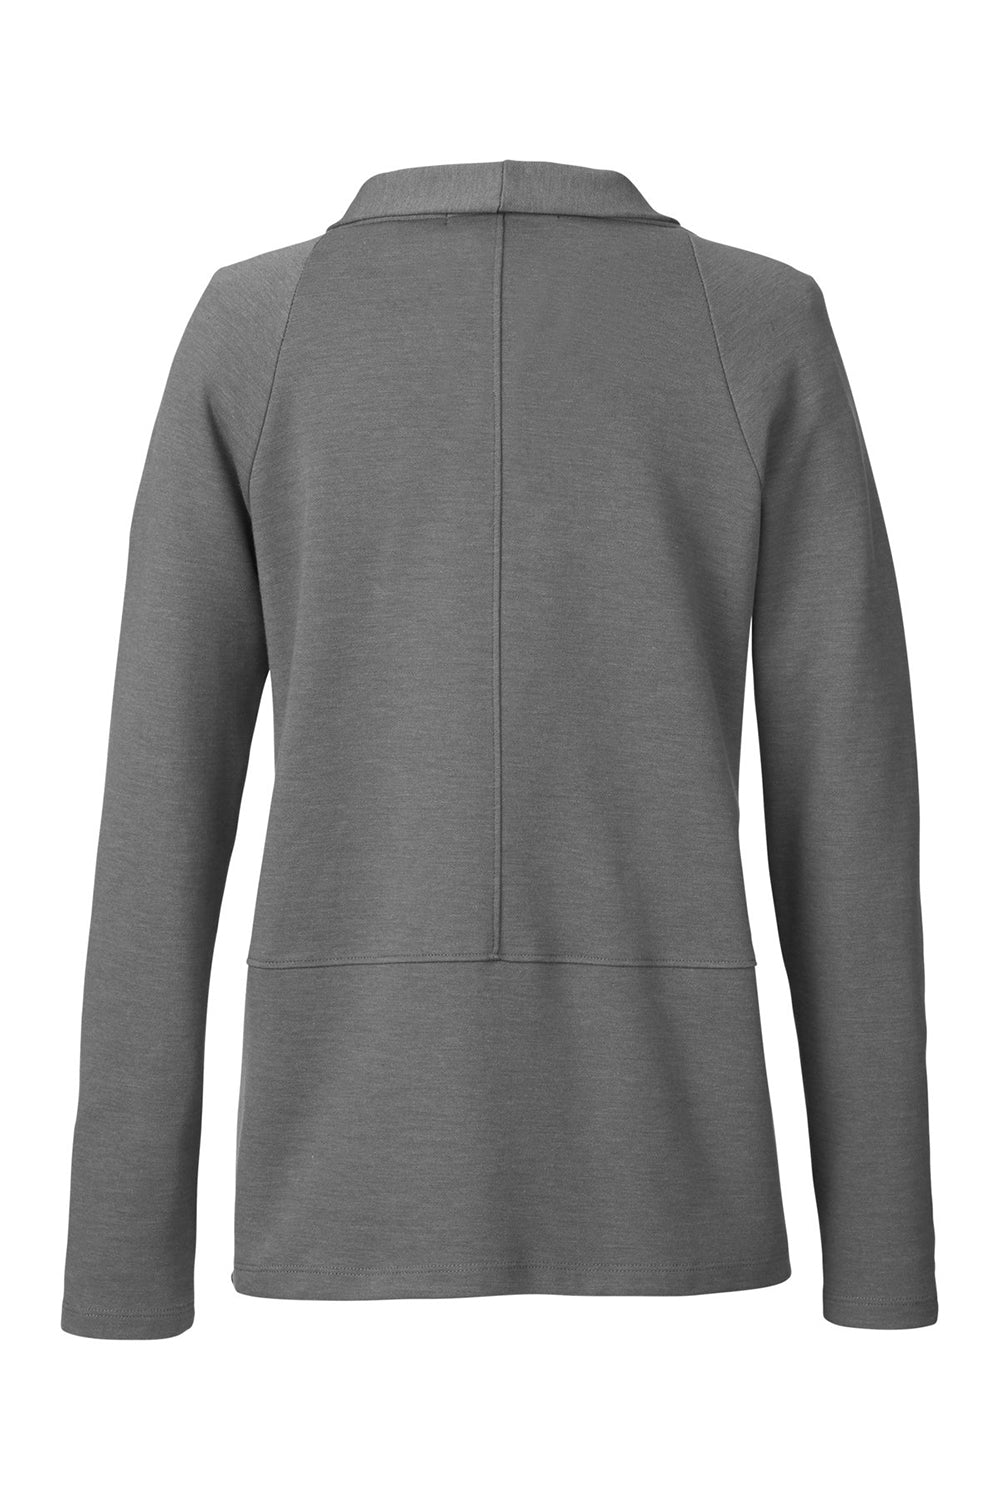 Devon & Jones DG481W Womens New Classics Charleston Cardigan Sweater Graphite Grey Melange Flat Back